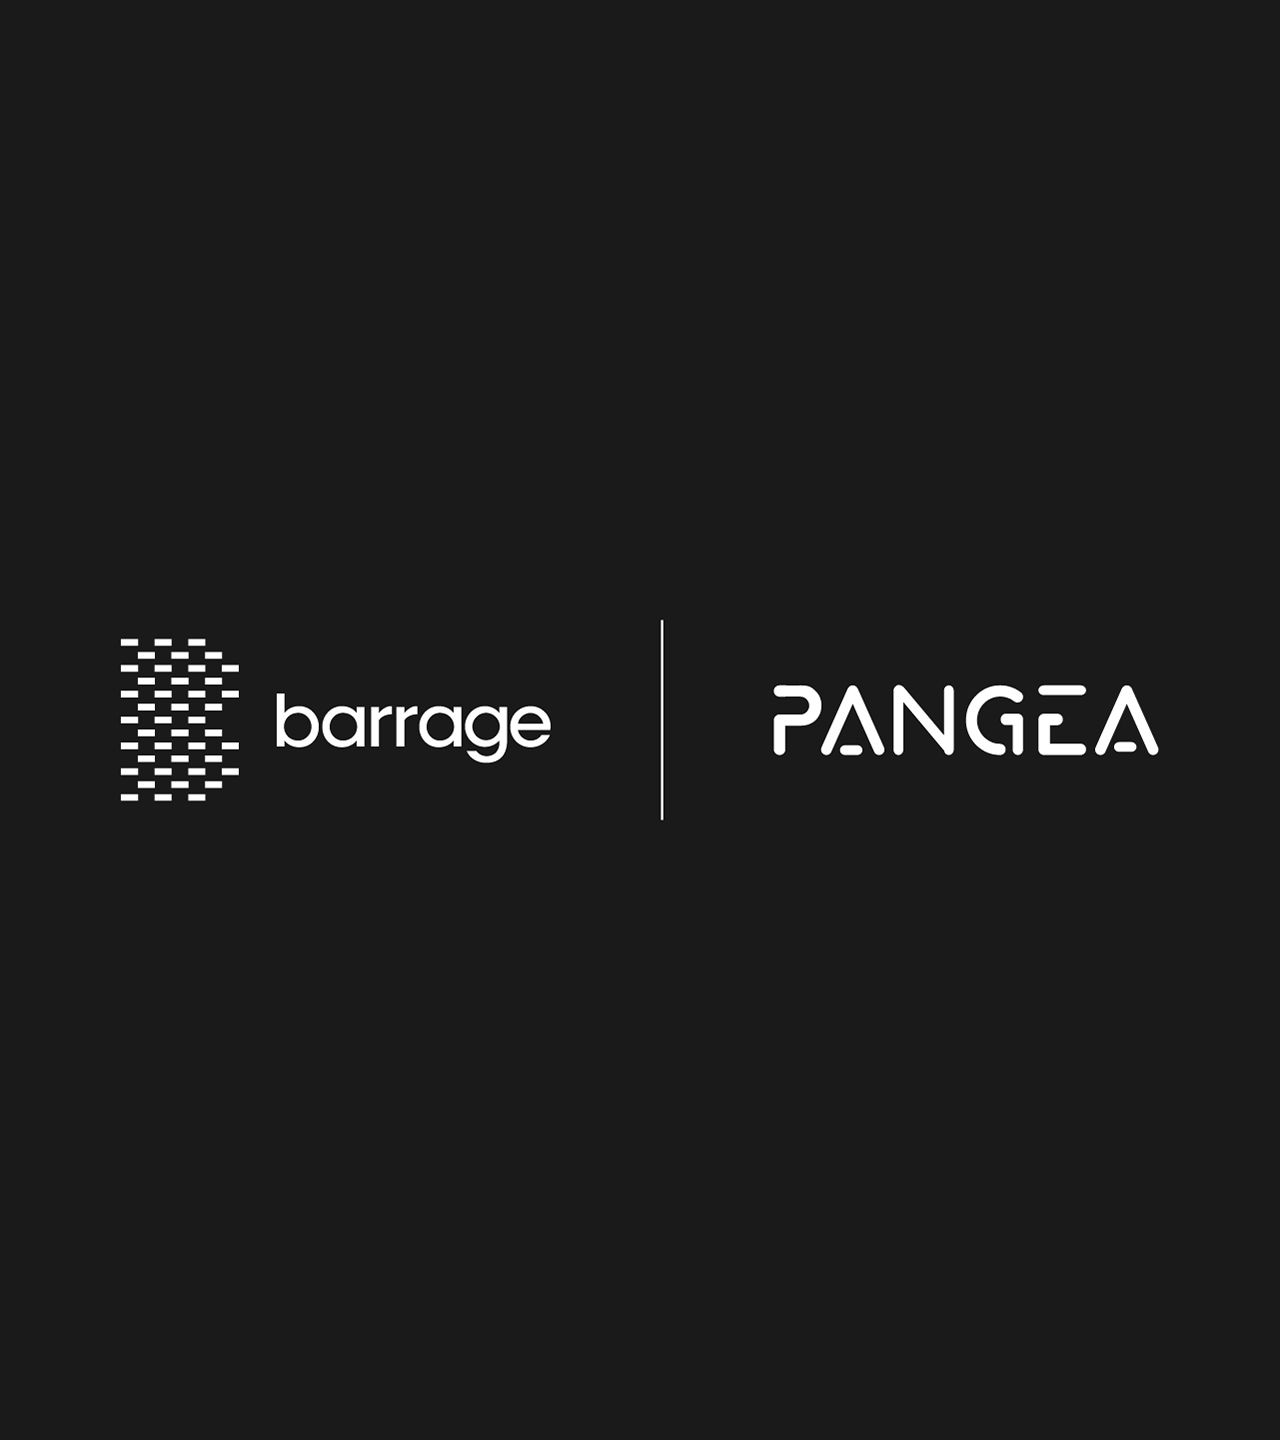 Barrage and Pangea logos - Hero Image